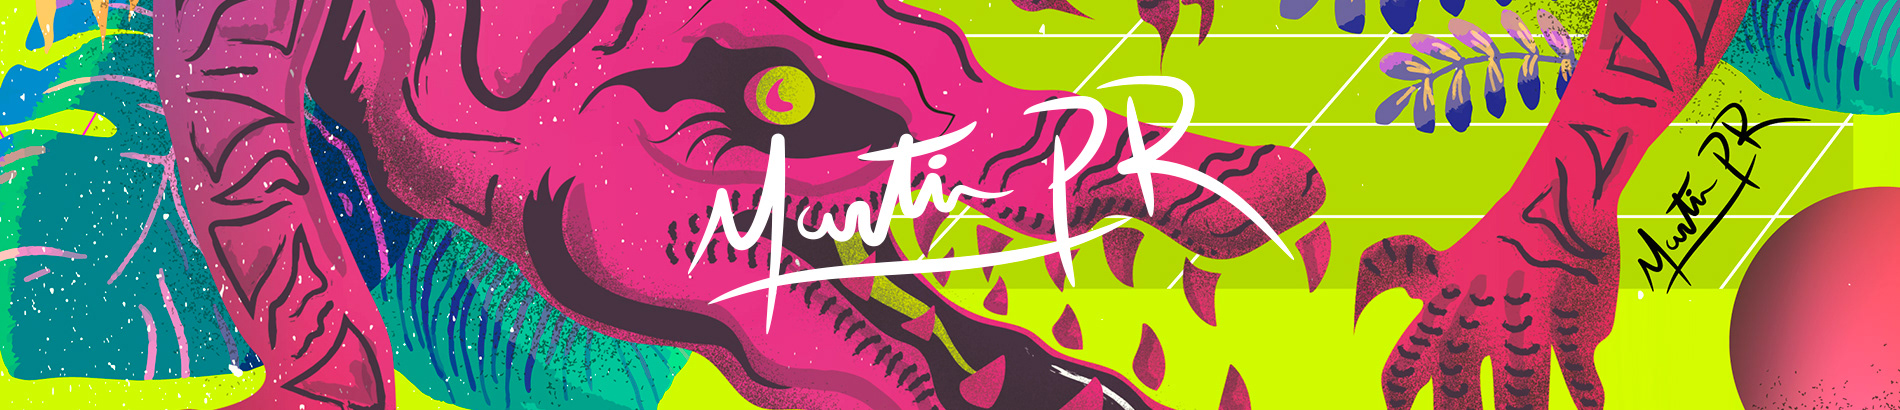 - MartinPR -'s profile banner